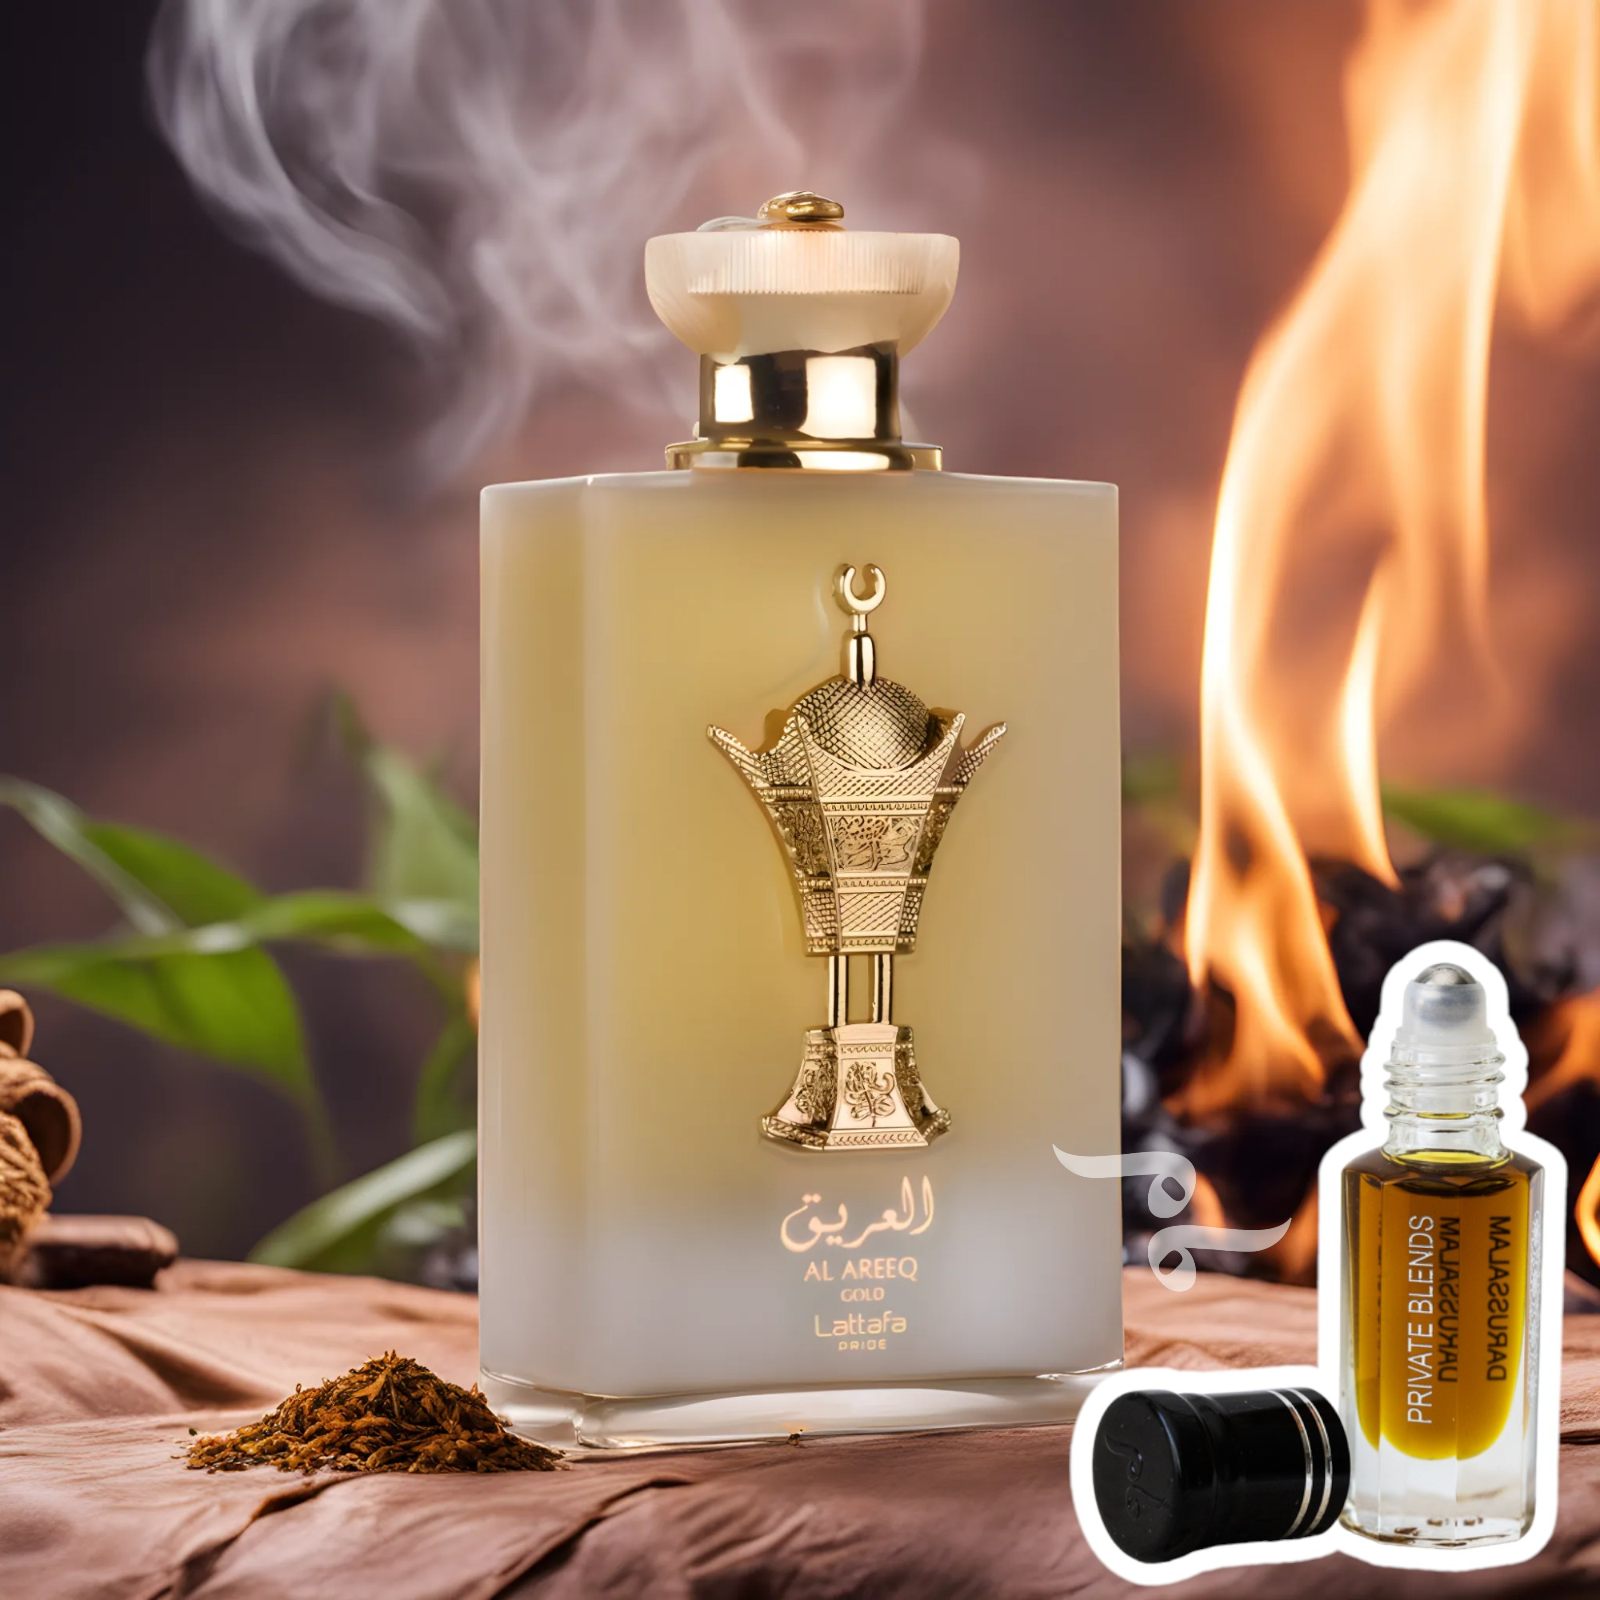 Al Areeq Gold + Honey Oud Premium Perfume Oil Combo